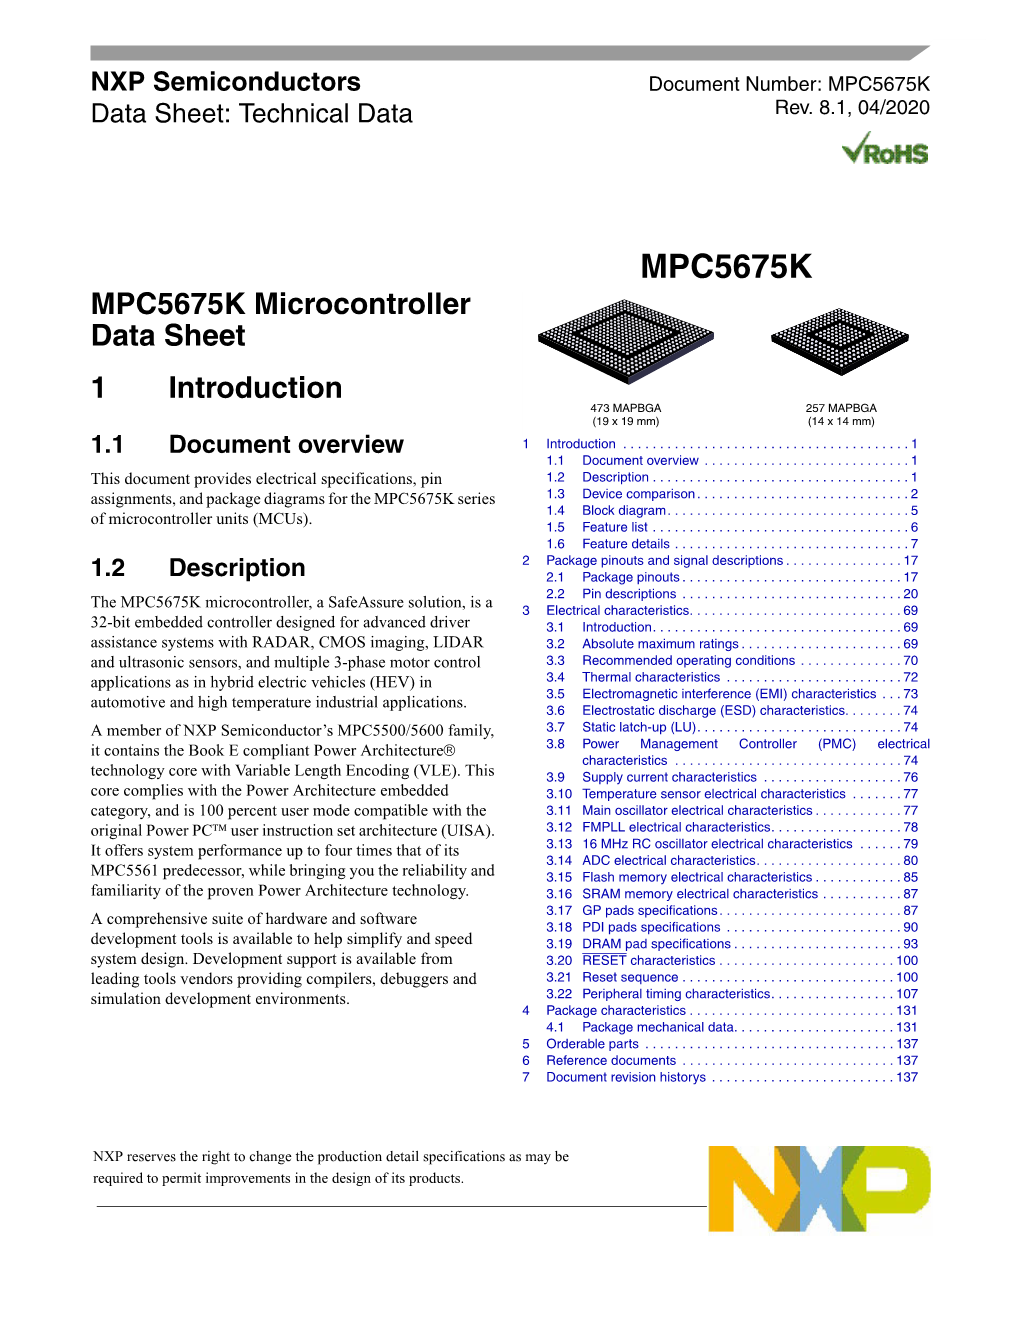 MPC5675K Data Sheet: Technical Data Rev